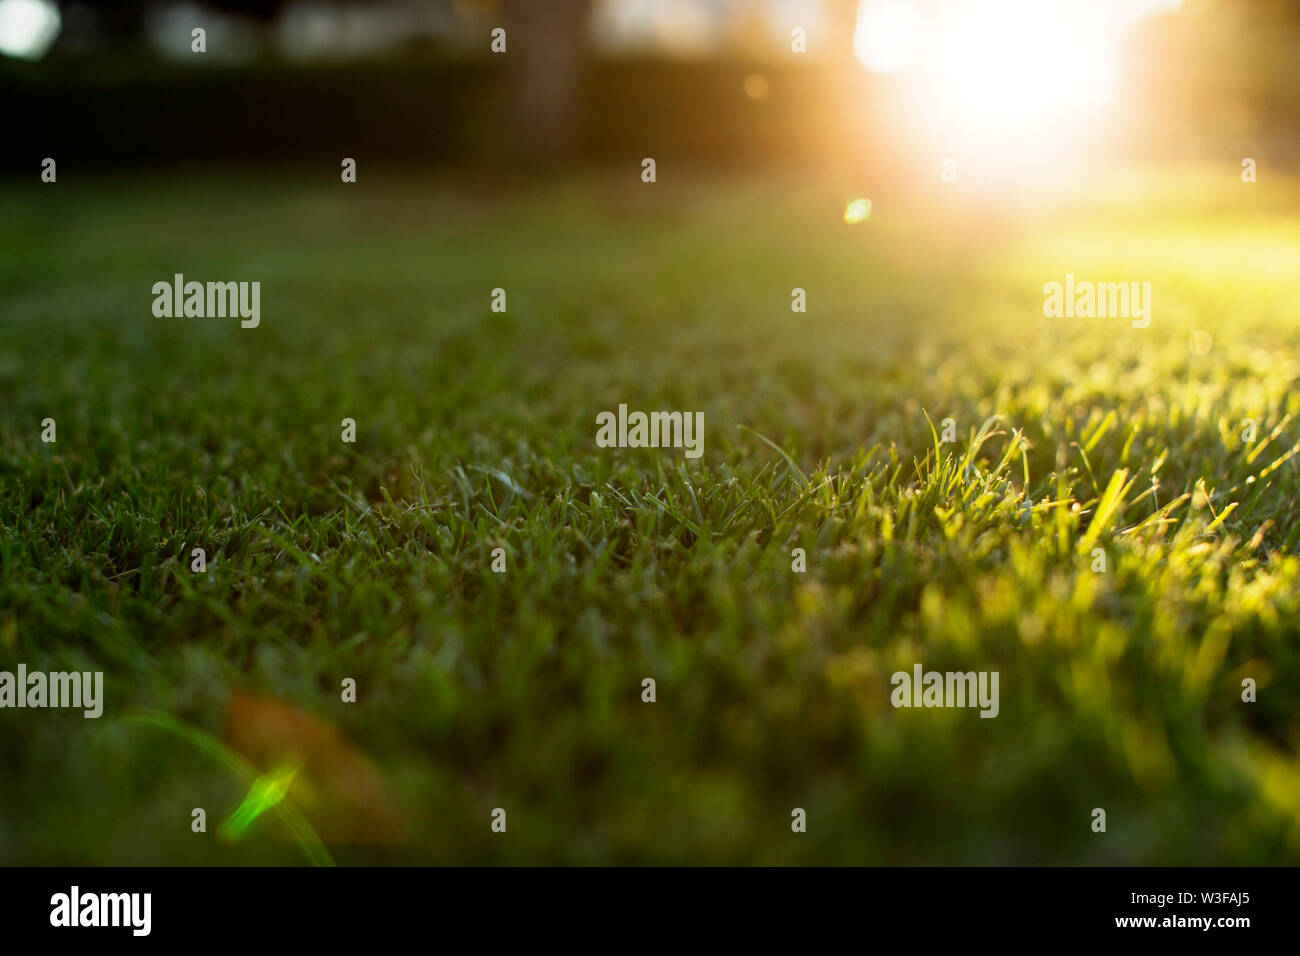 Sun shining over a neatly cut lawn. Stock Photo